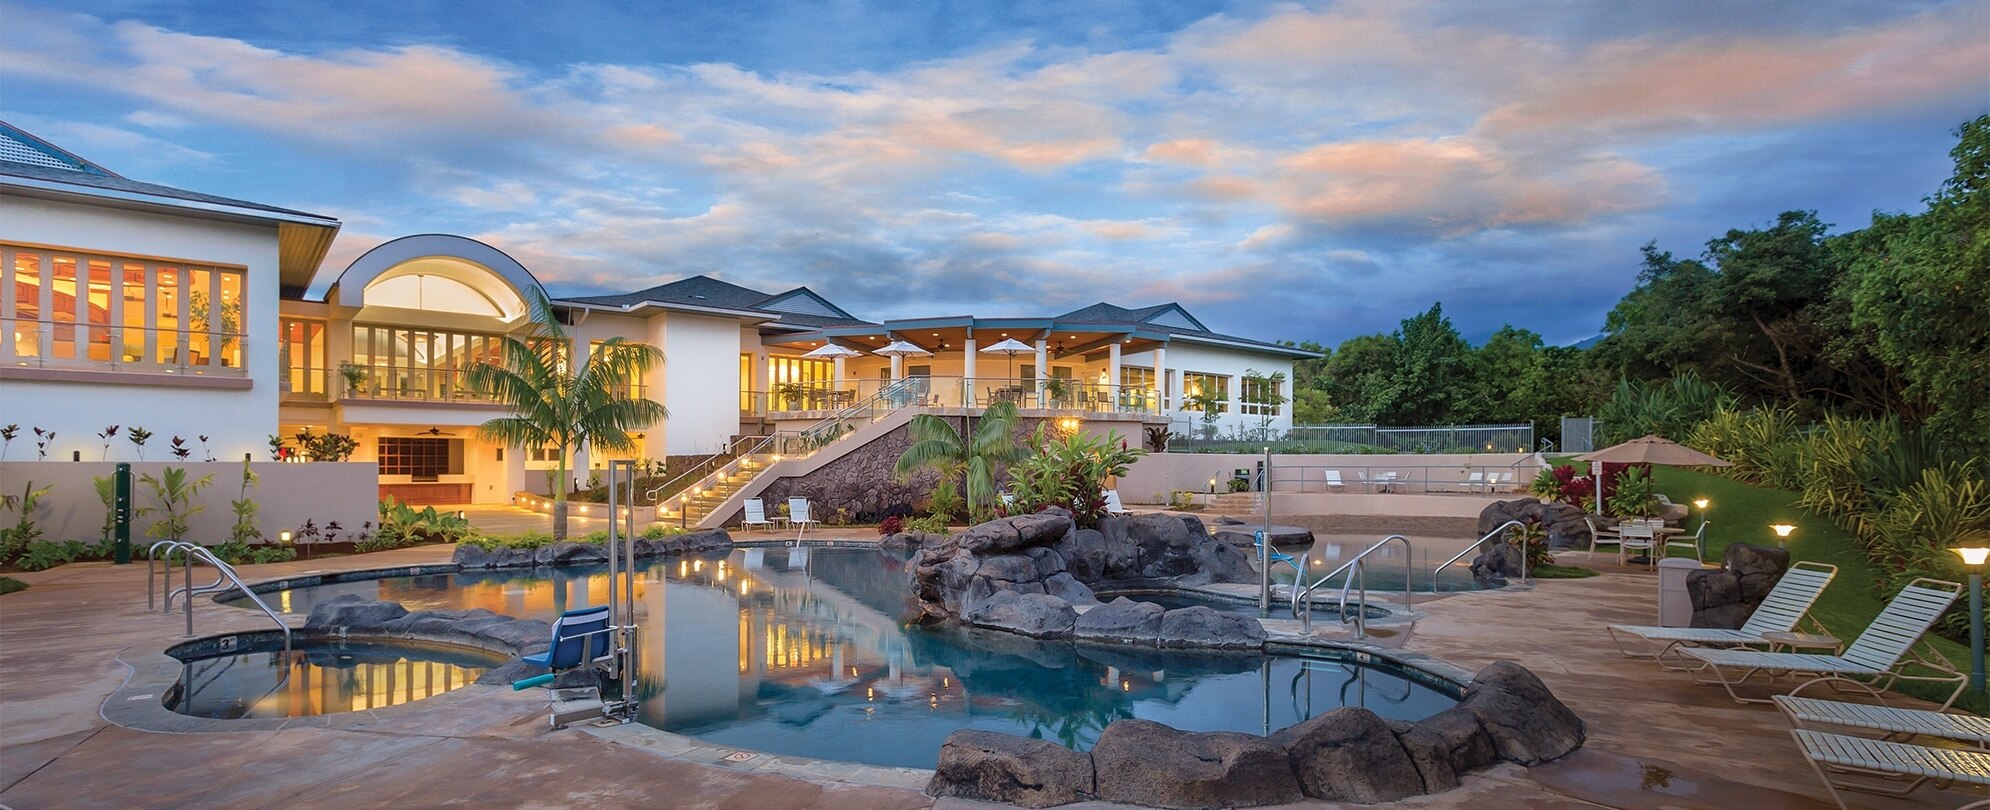 A resort pool at Club Wyndham Bali Hai Villas in Kauai, Hawaii.